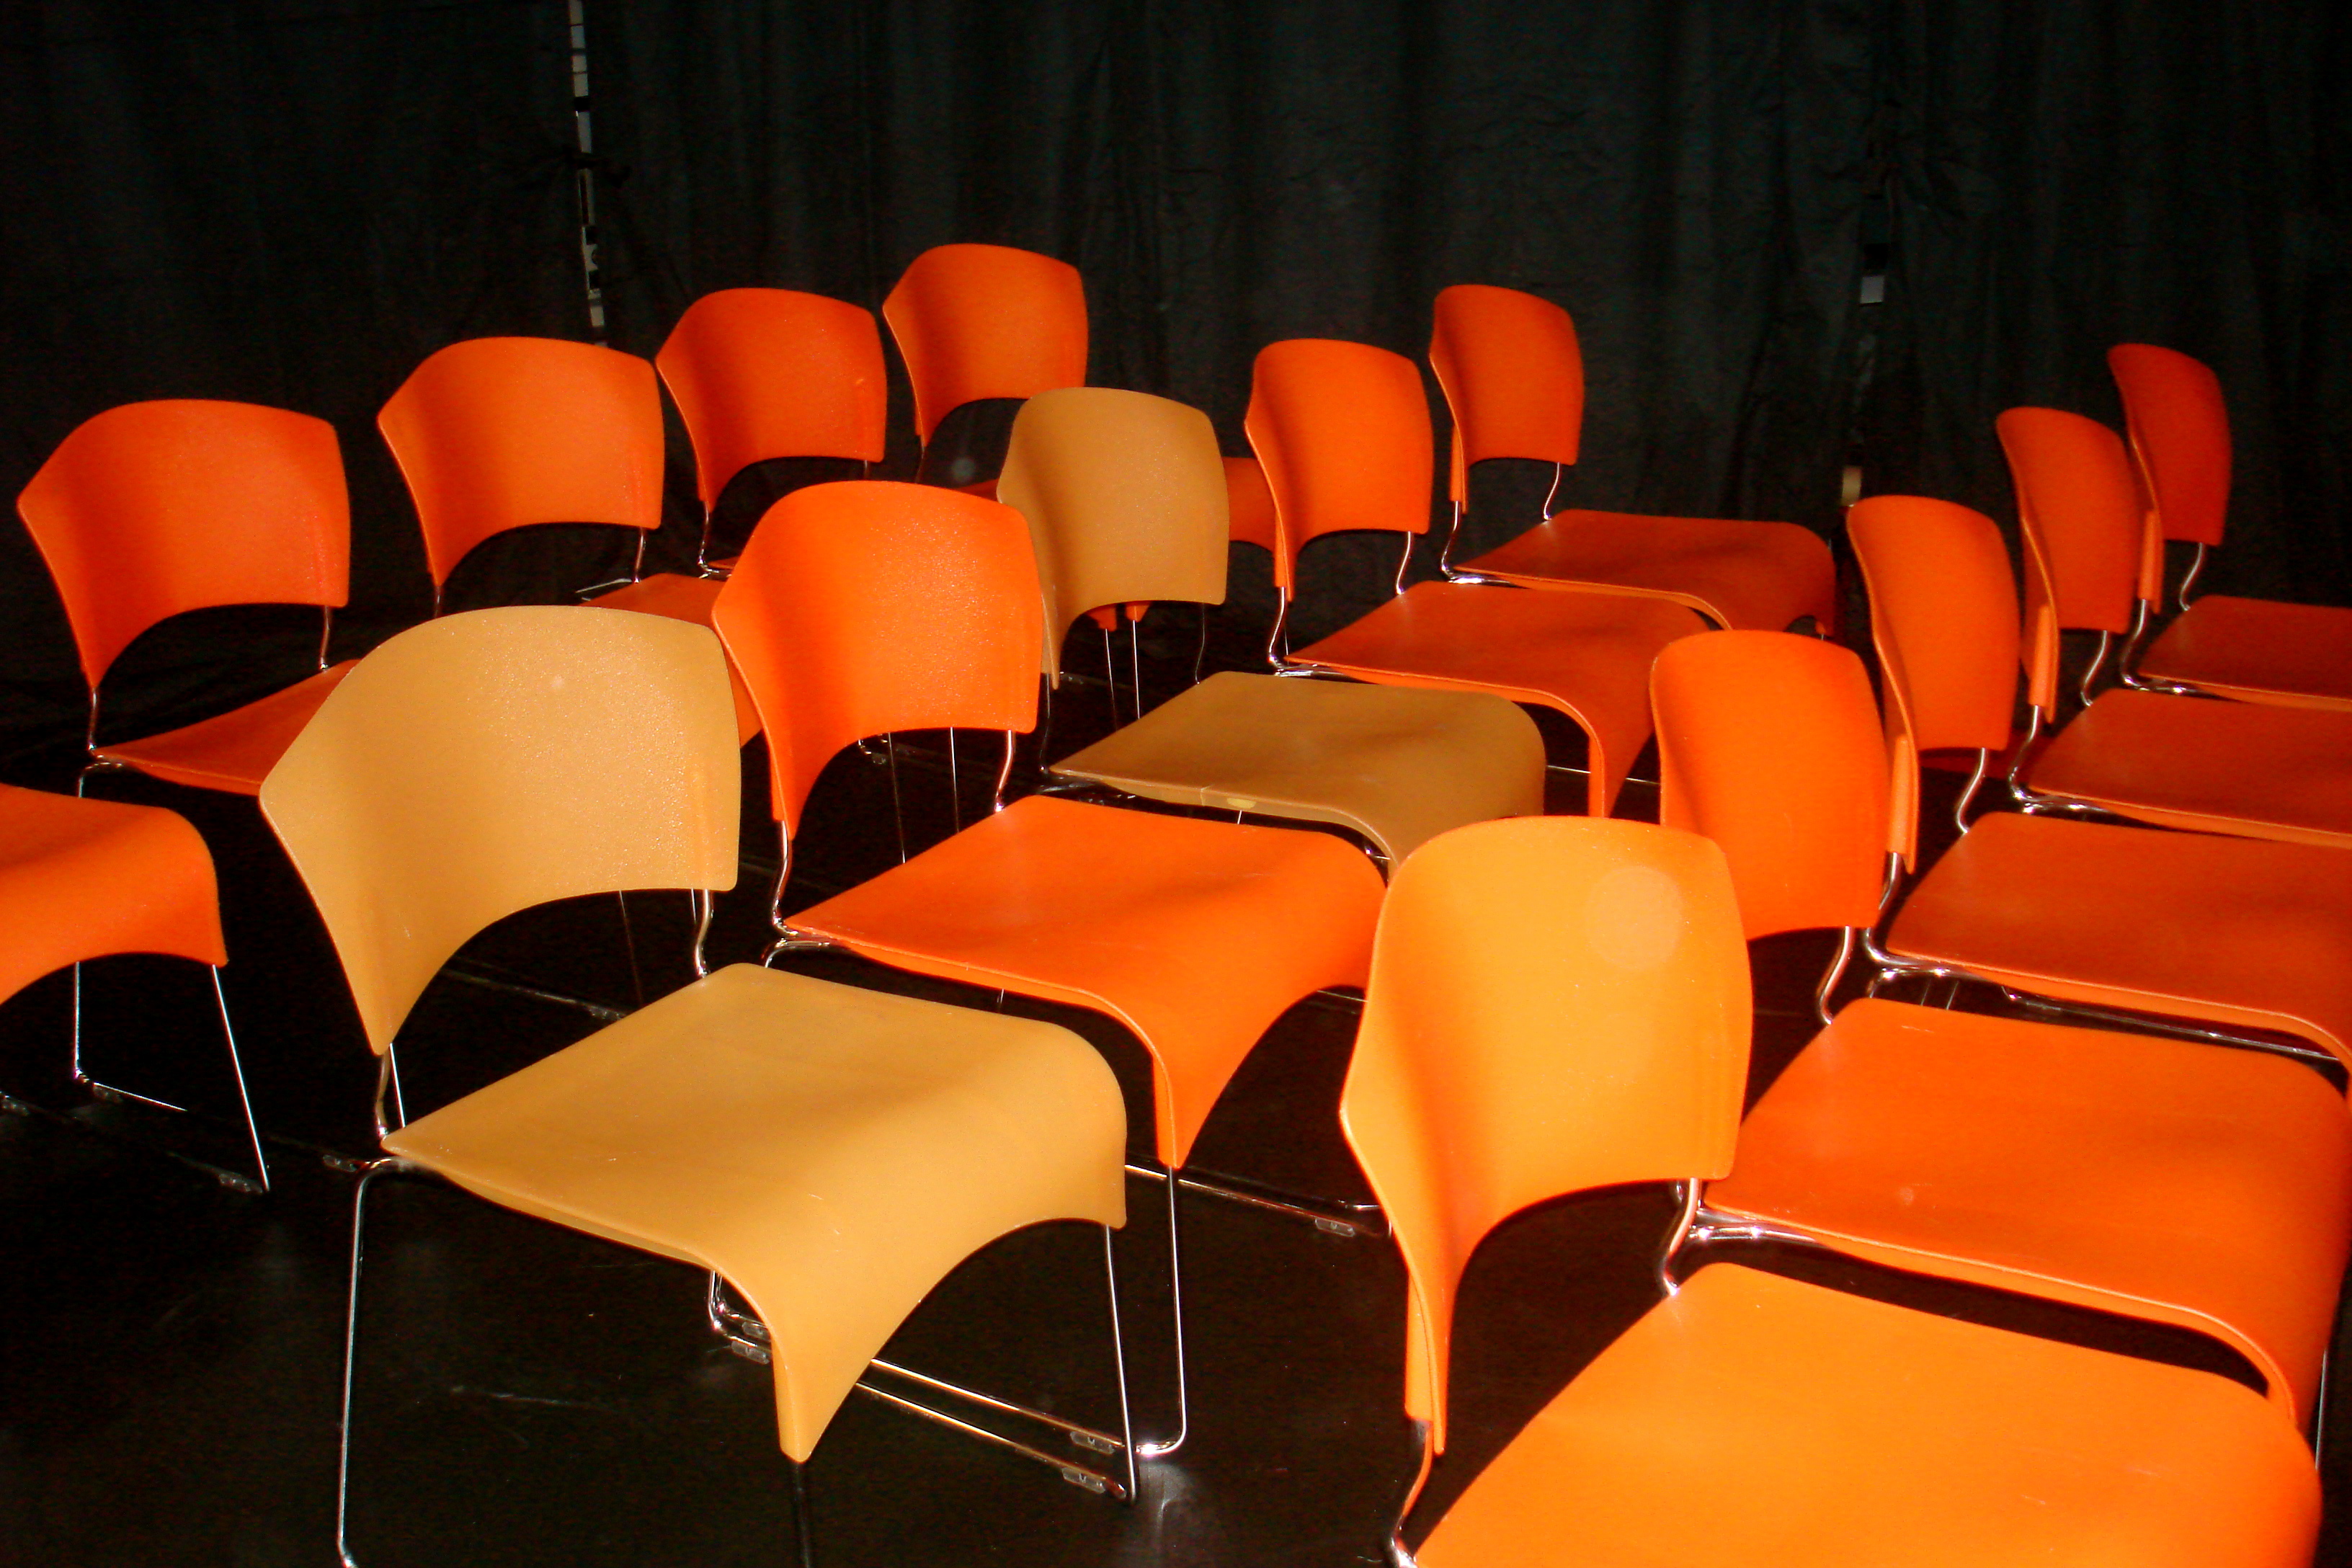 The Soup audience studio